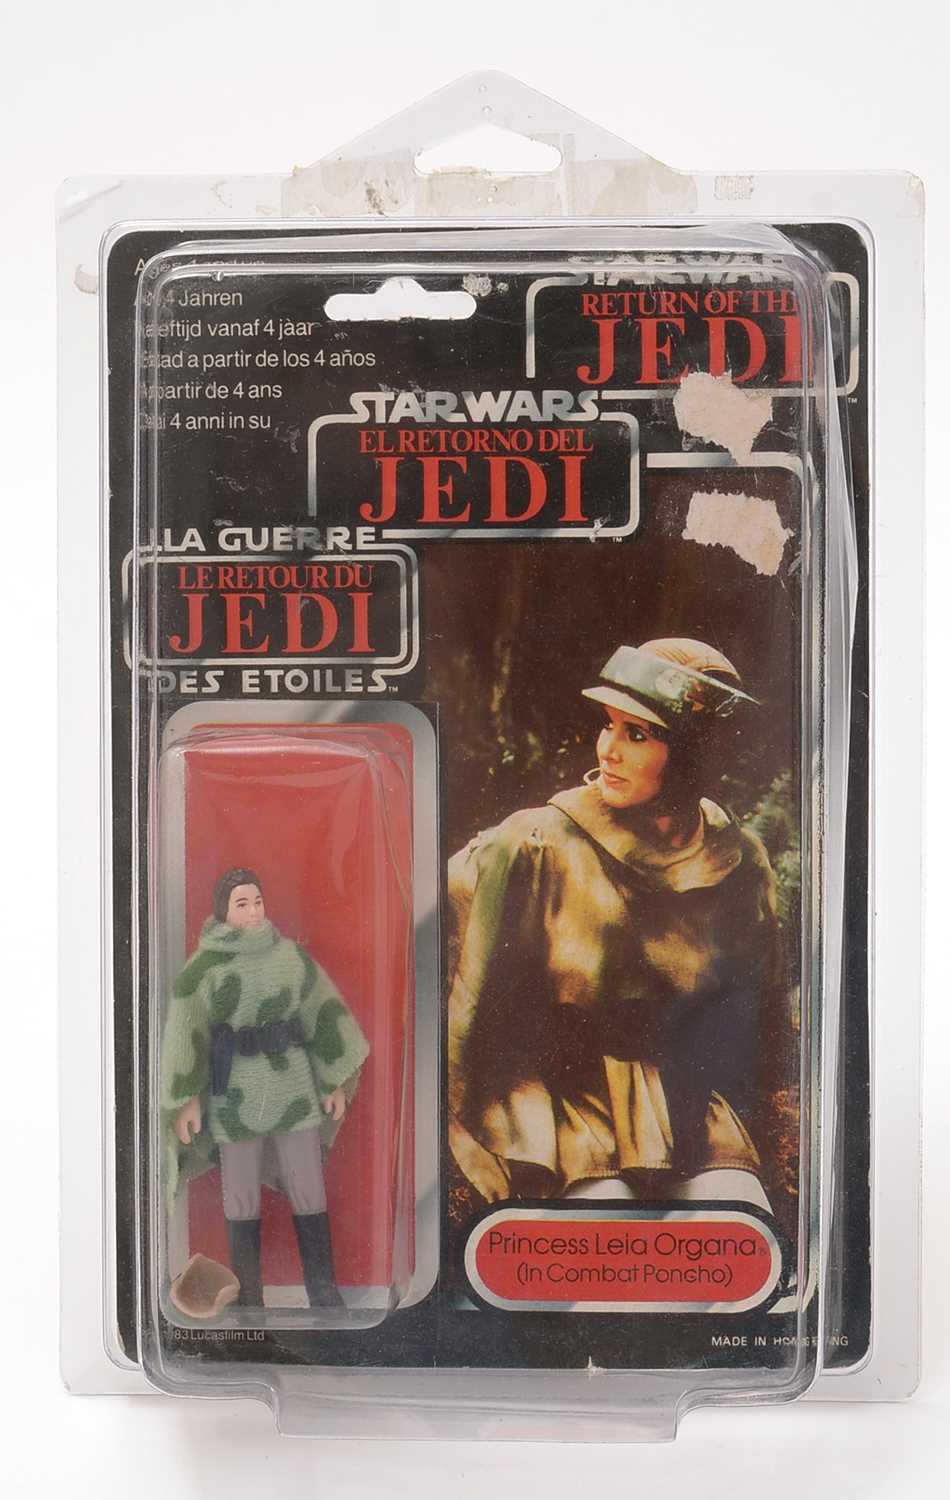 Lot 284 - Star Wars Return of the Jedi Princess Leia Organa (In Combat Poncho) carded figure